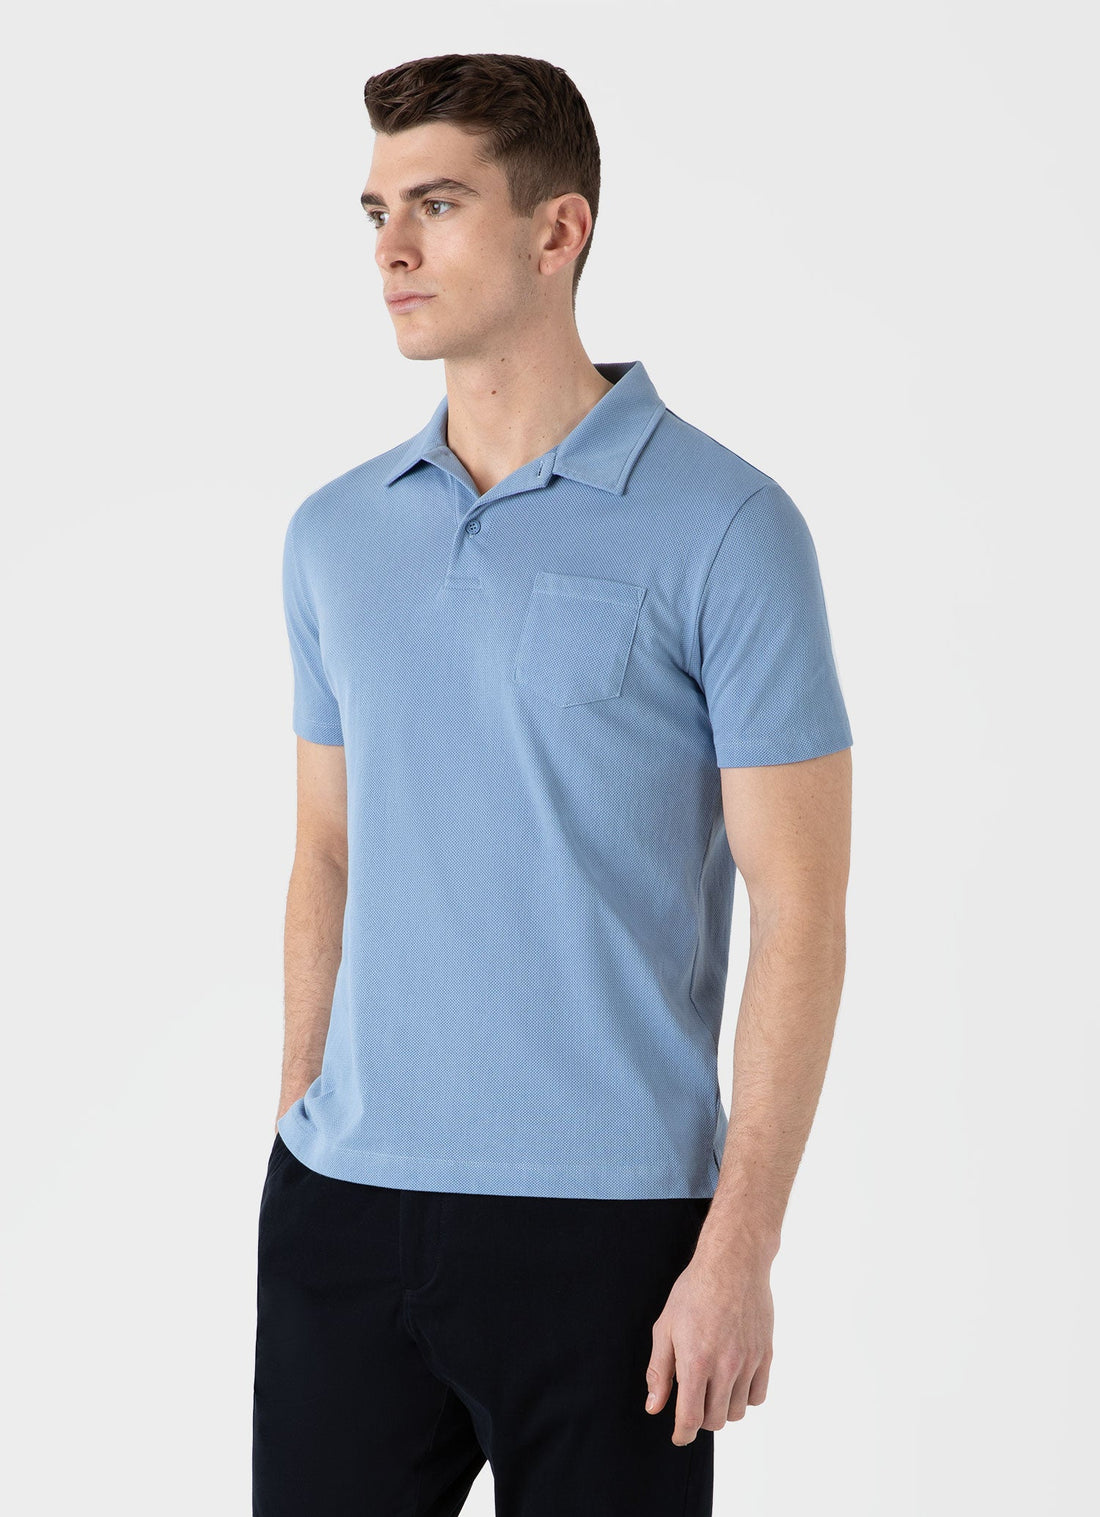 Men's Riviera Polo Shirt in Cornflower